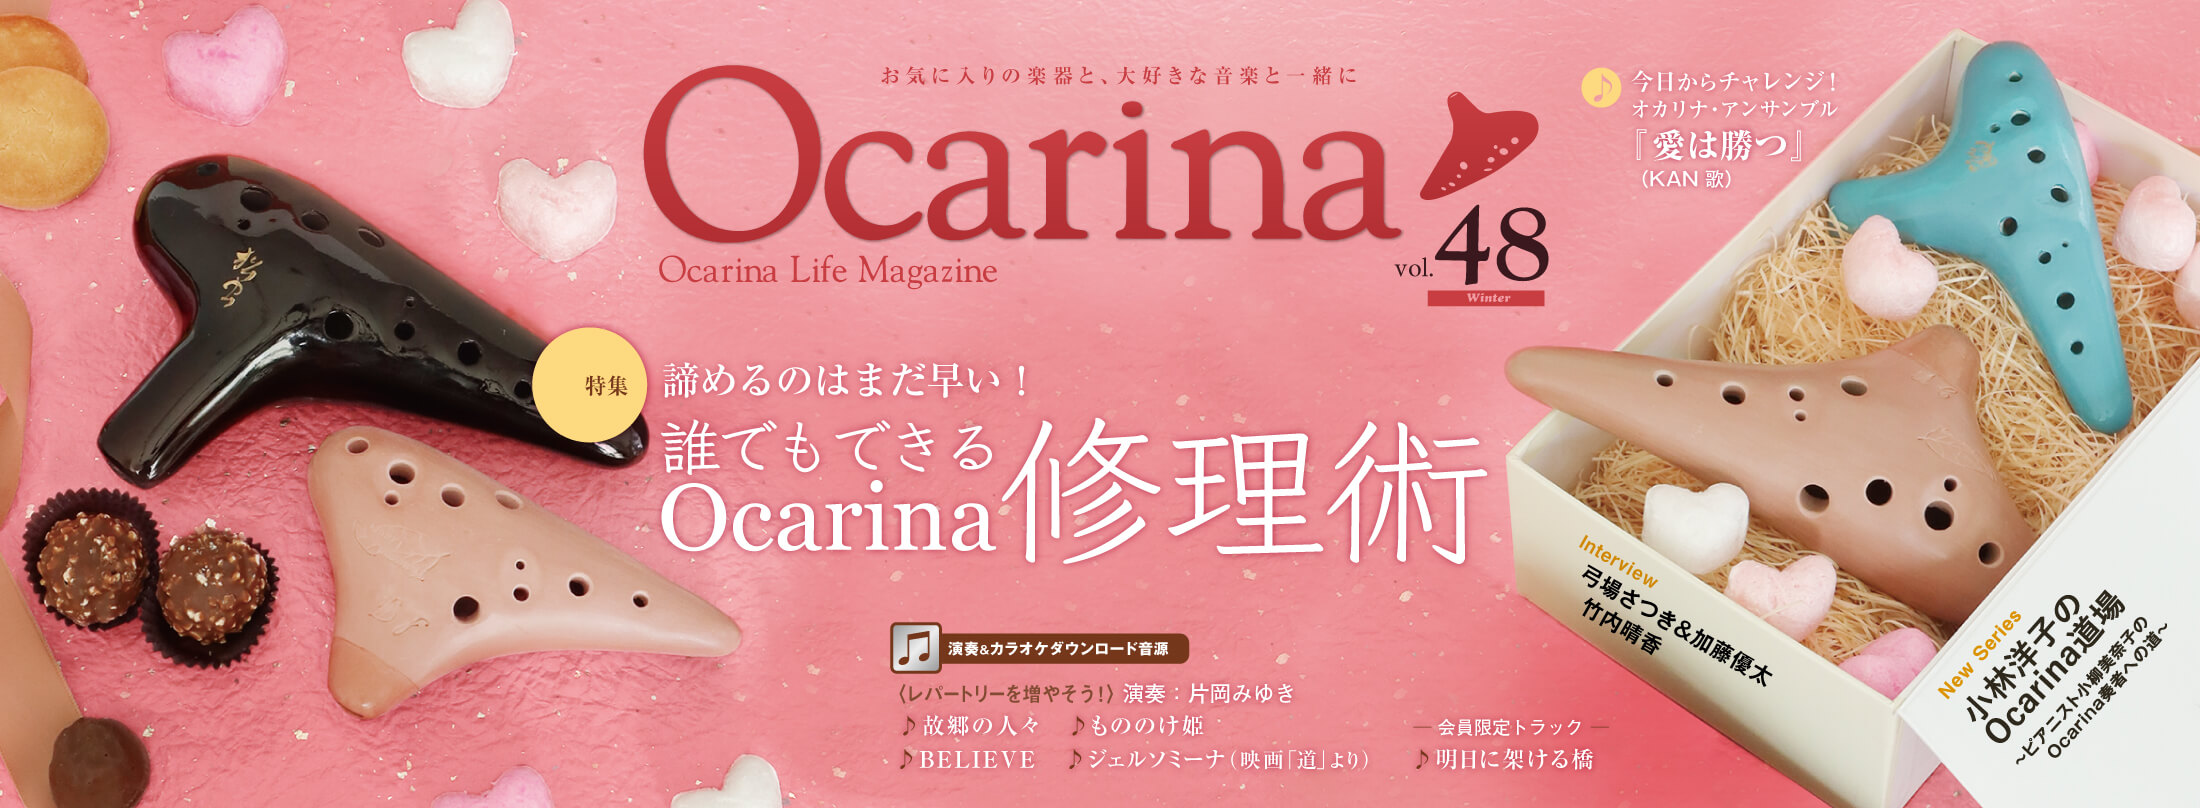 Ocarina 48号